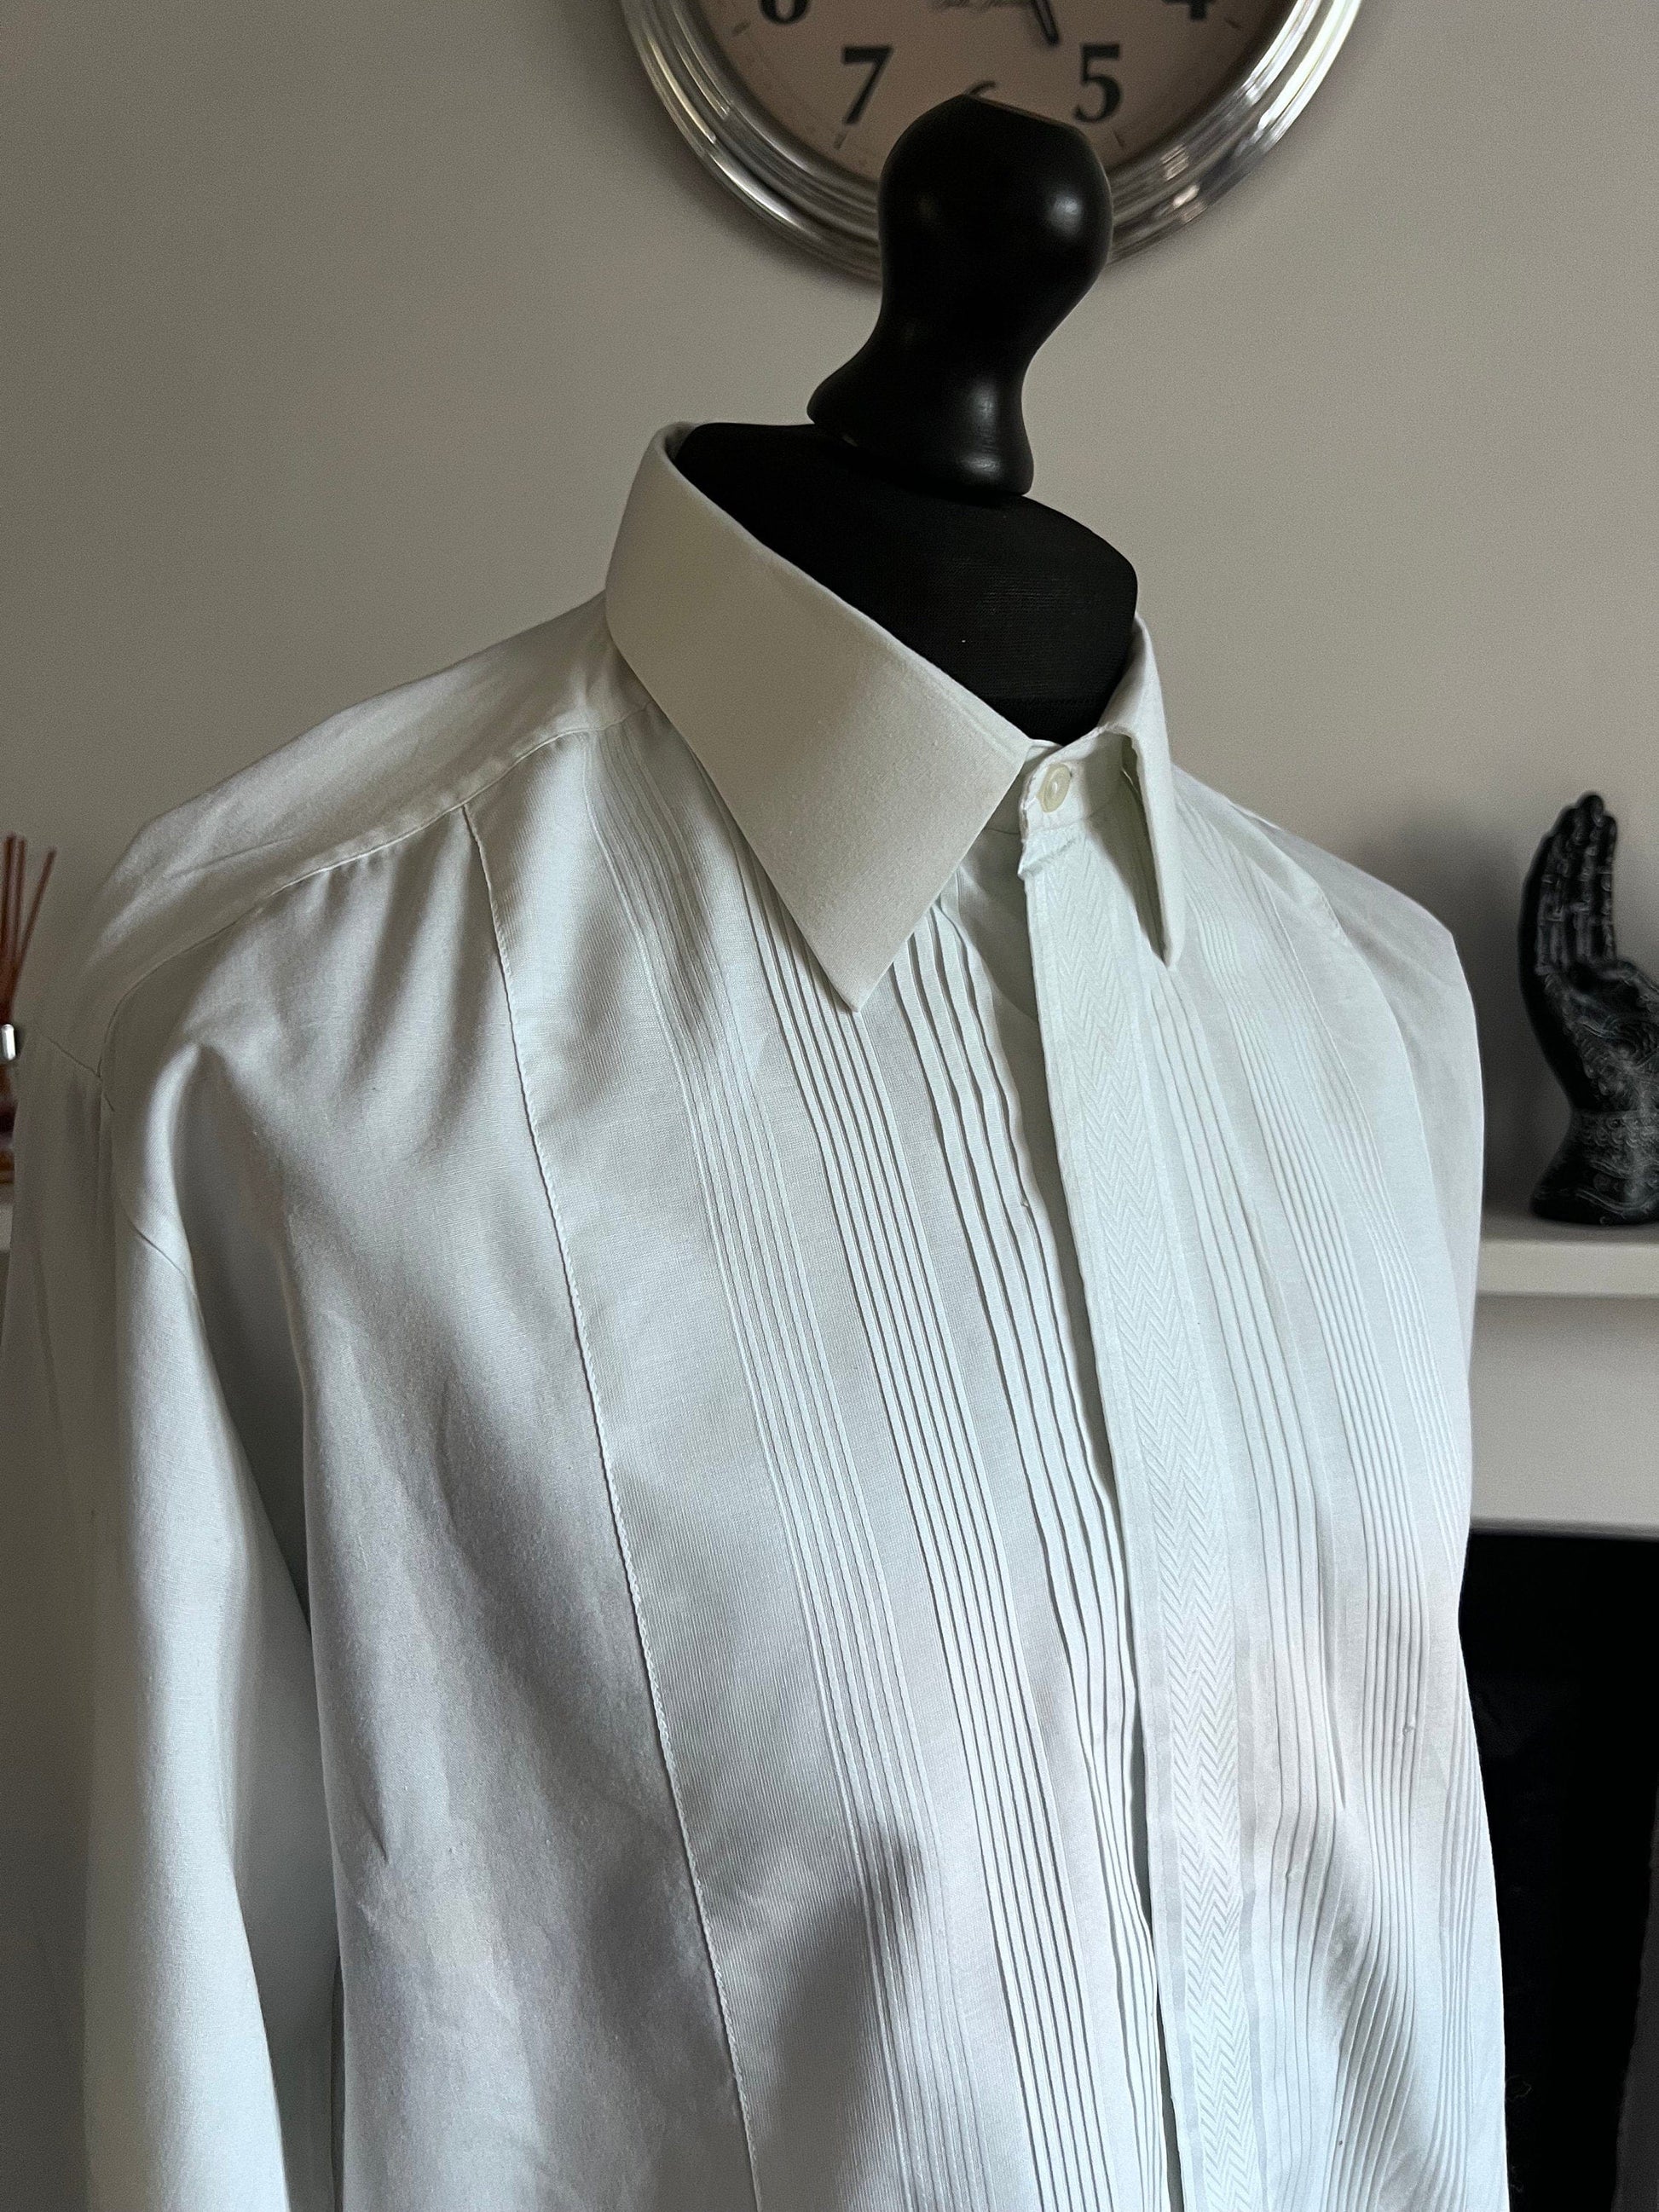 Vintage 1960s White Dress Shirt Bespoke gents Shirt , vintage shirt, vintage shirt, men’s shirt, vintage menswear, vintage men’s clothes